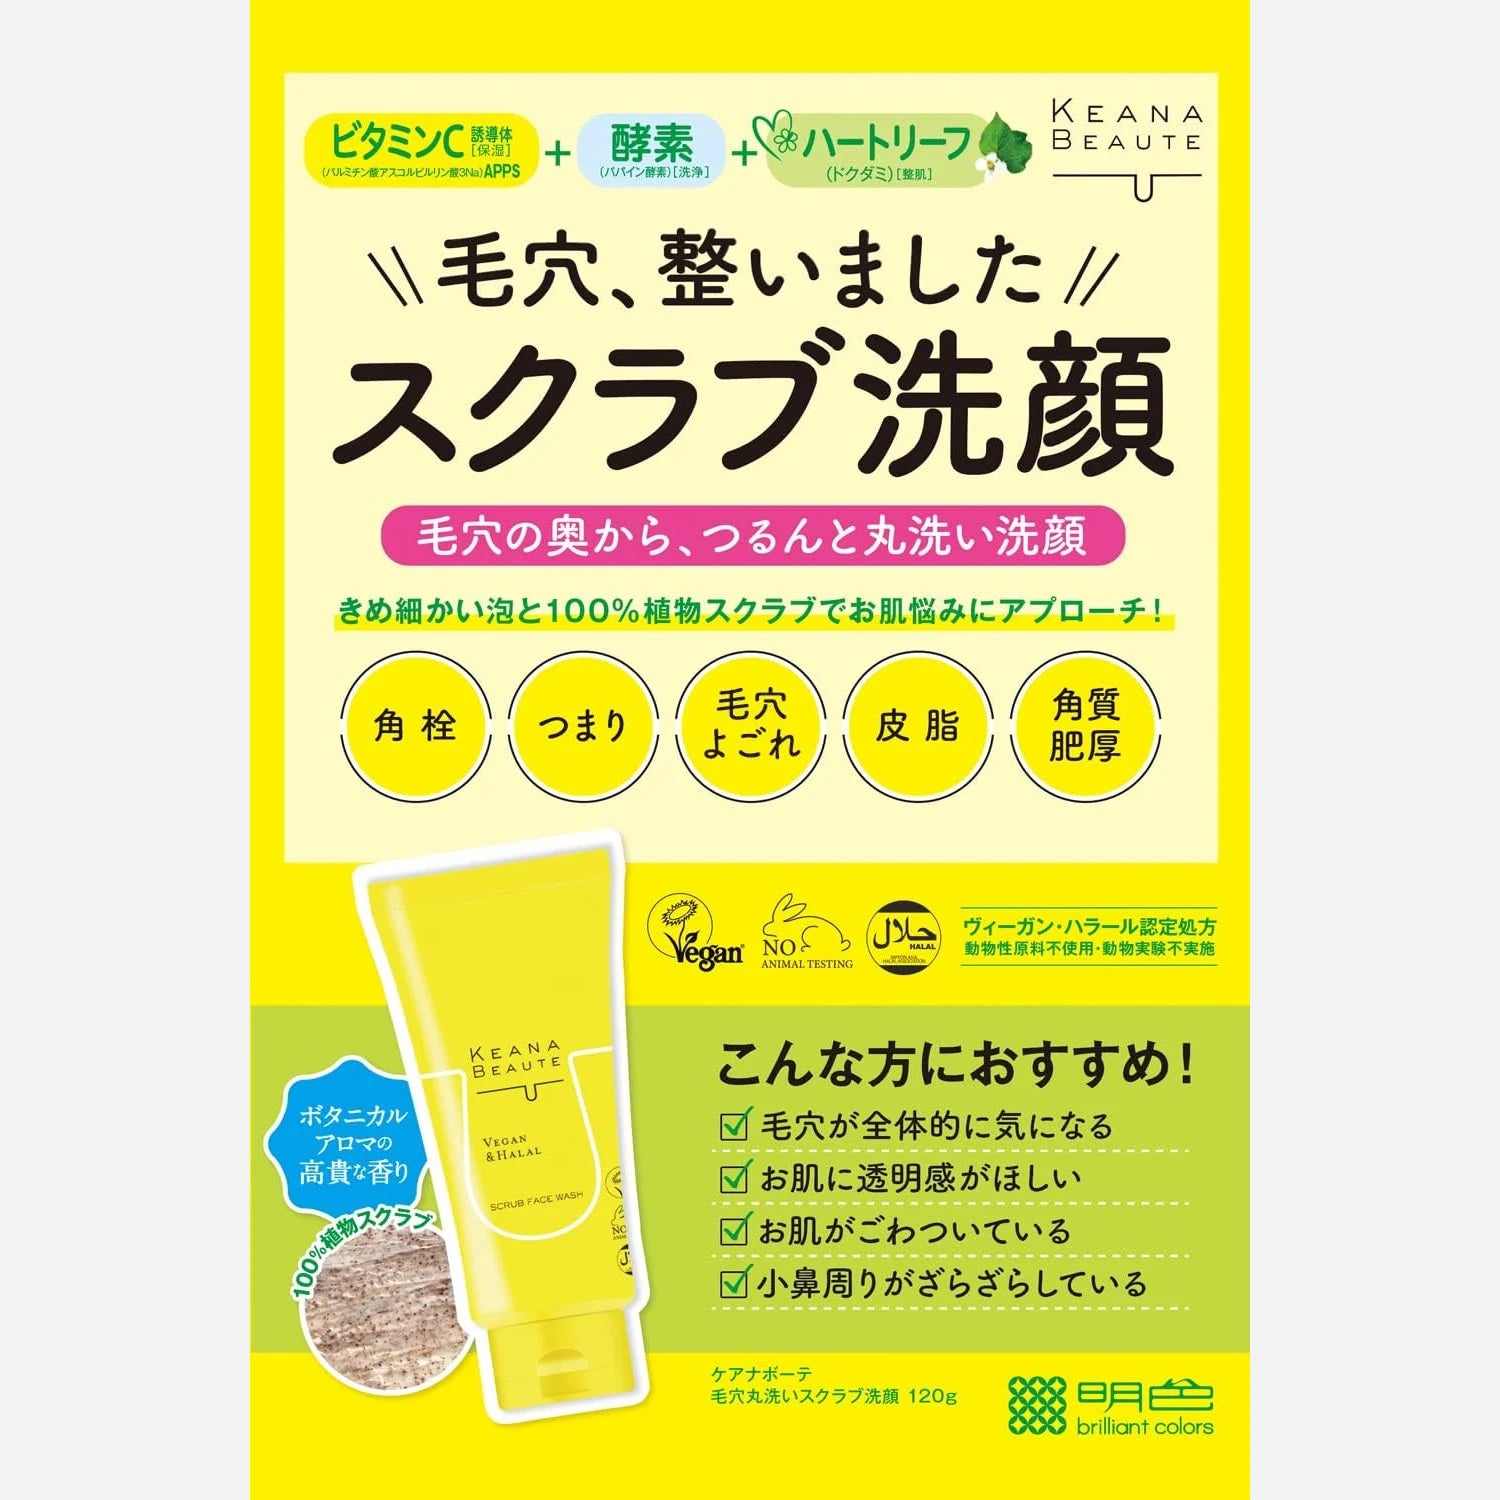 Meishoku Keana Beaute Vitamin C Scrub Face Wash 120g - Buy Me Japan